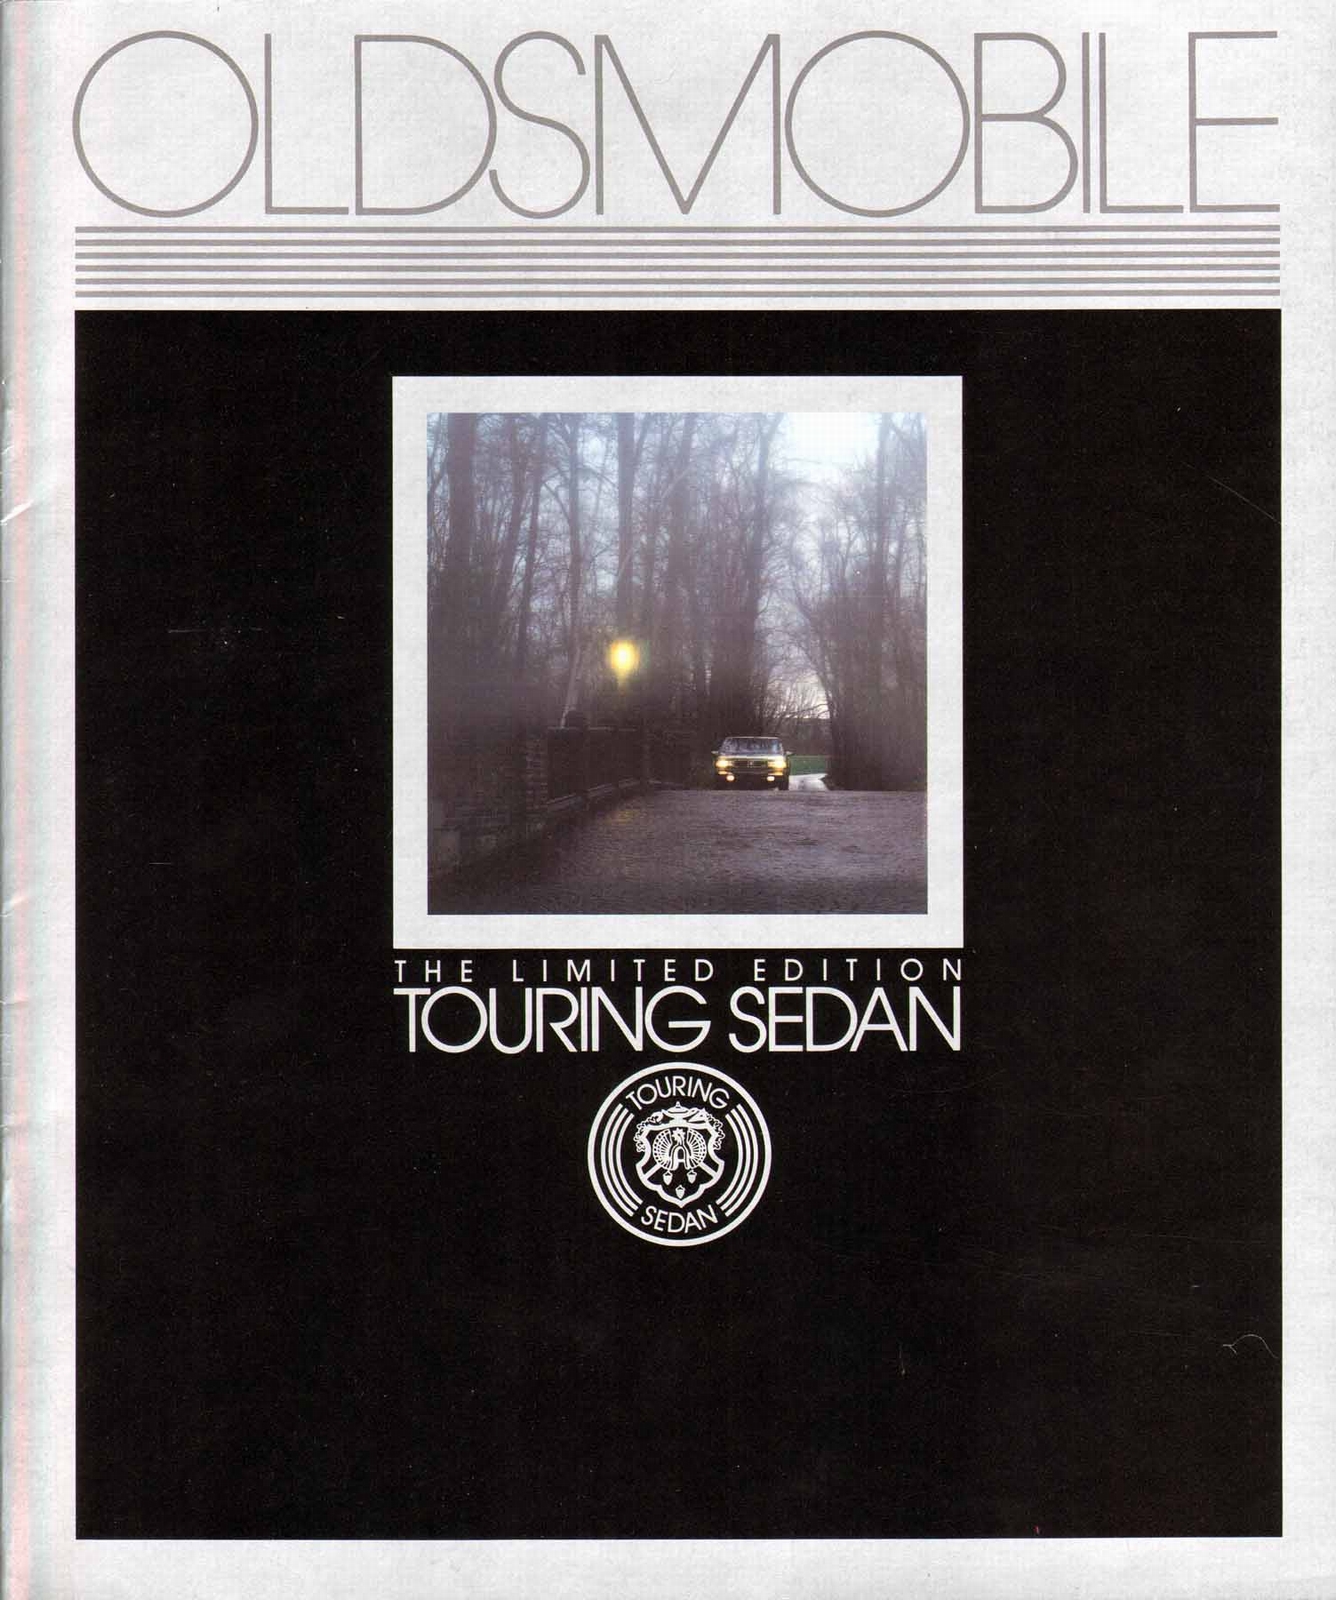 n_1987 Oldsmobile Touring Sedan Foldout-01.jpg